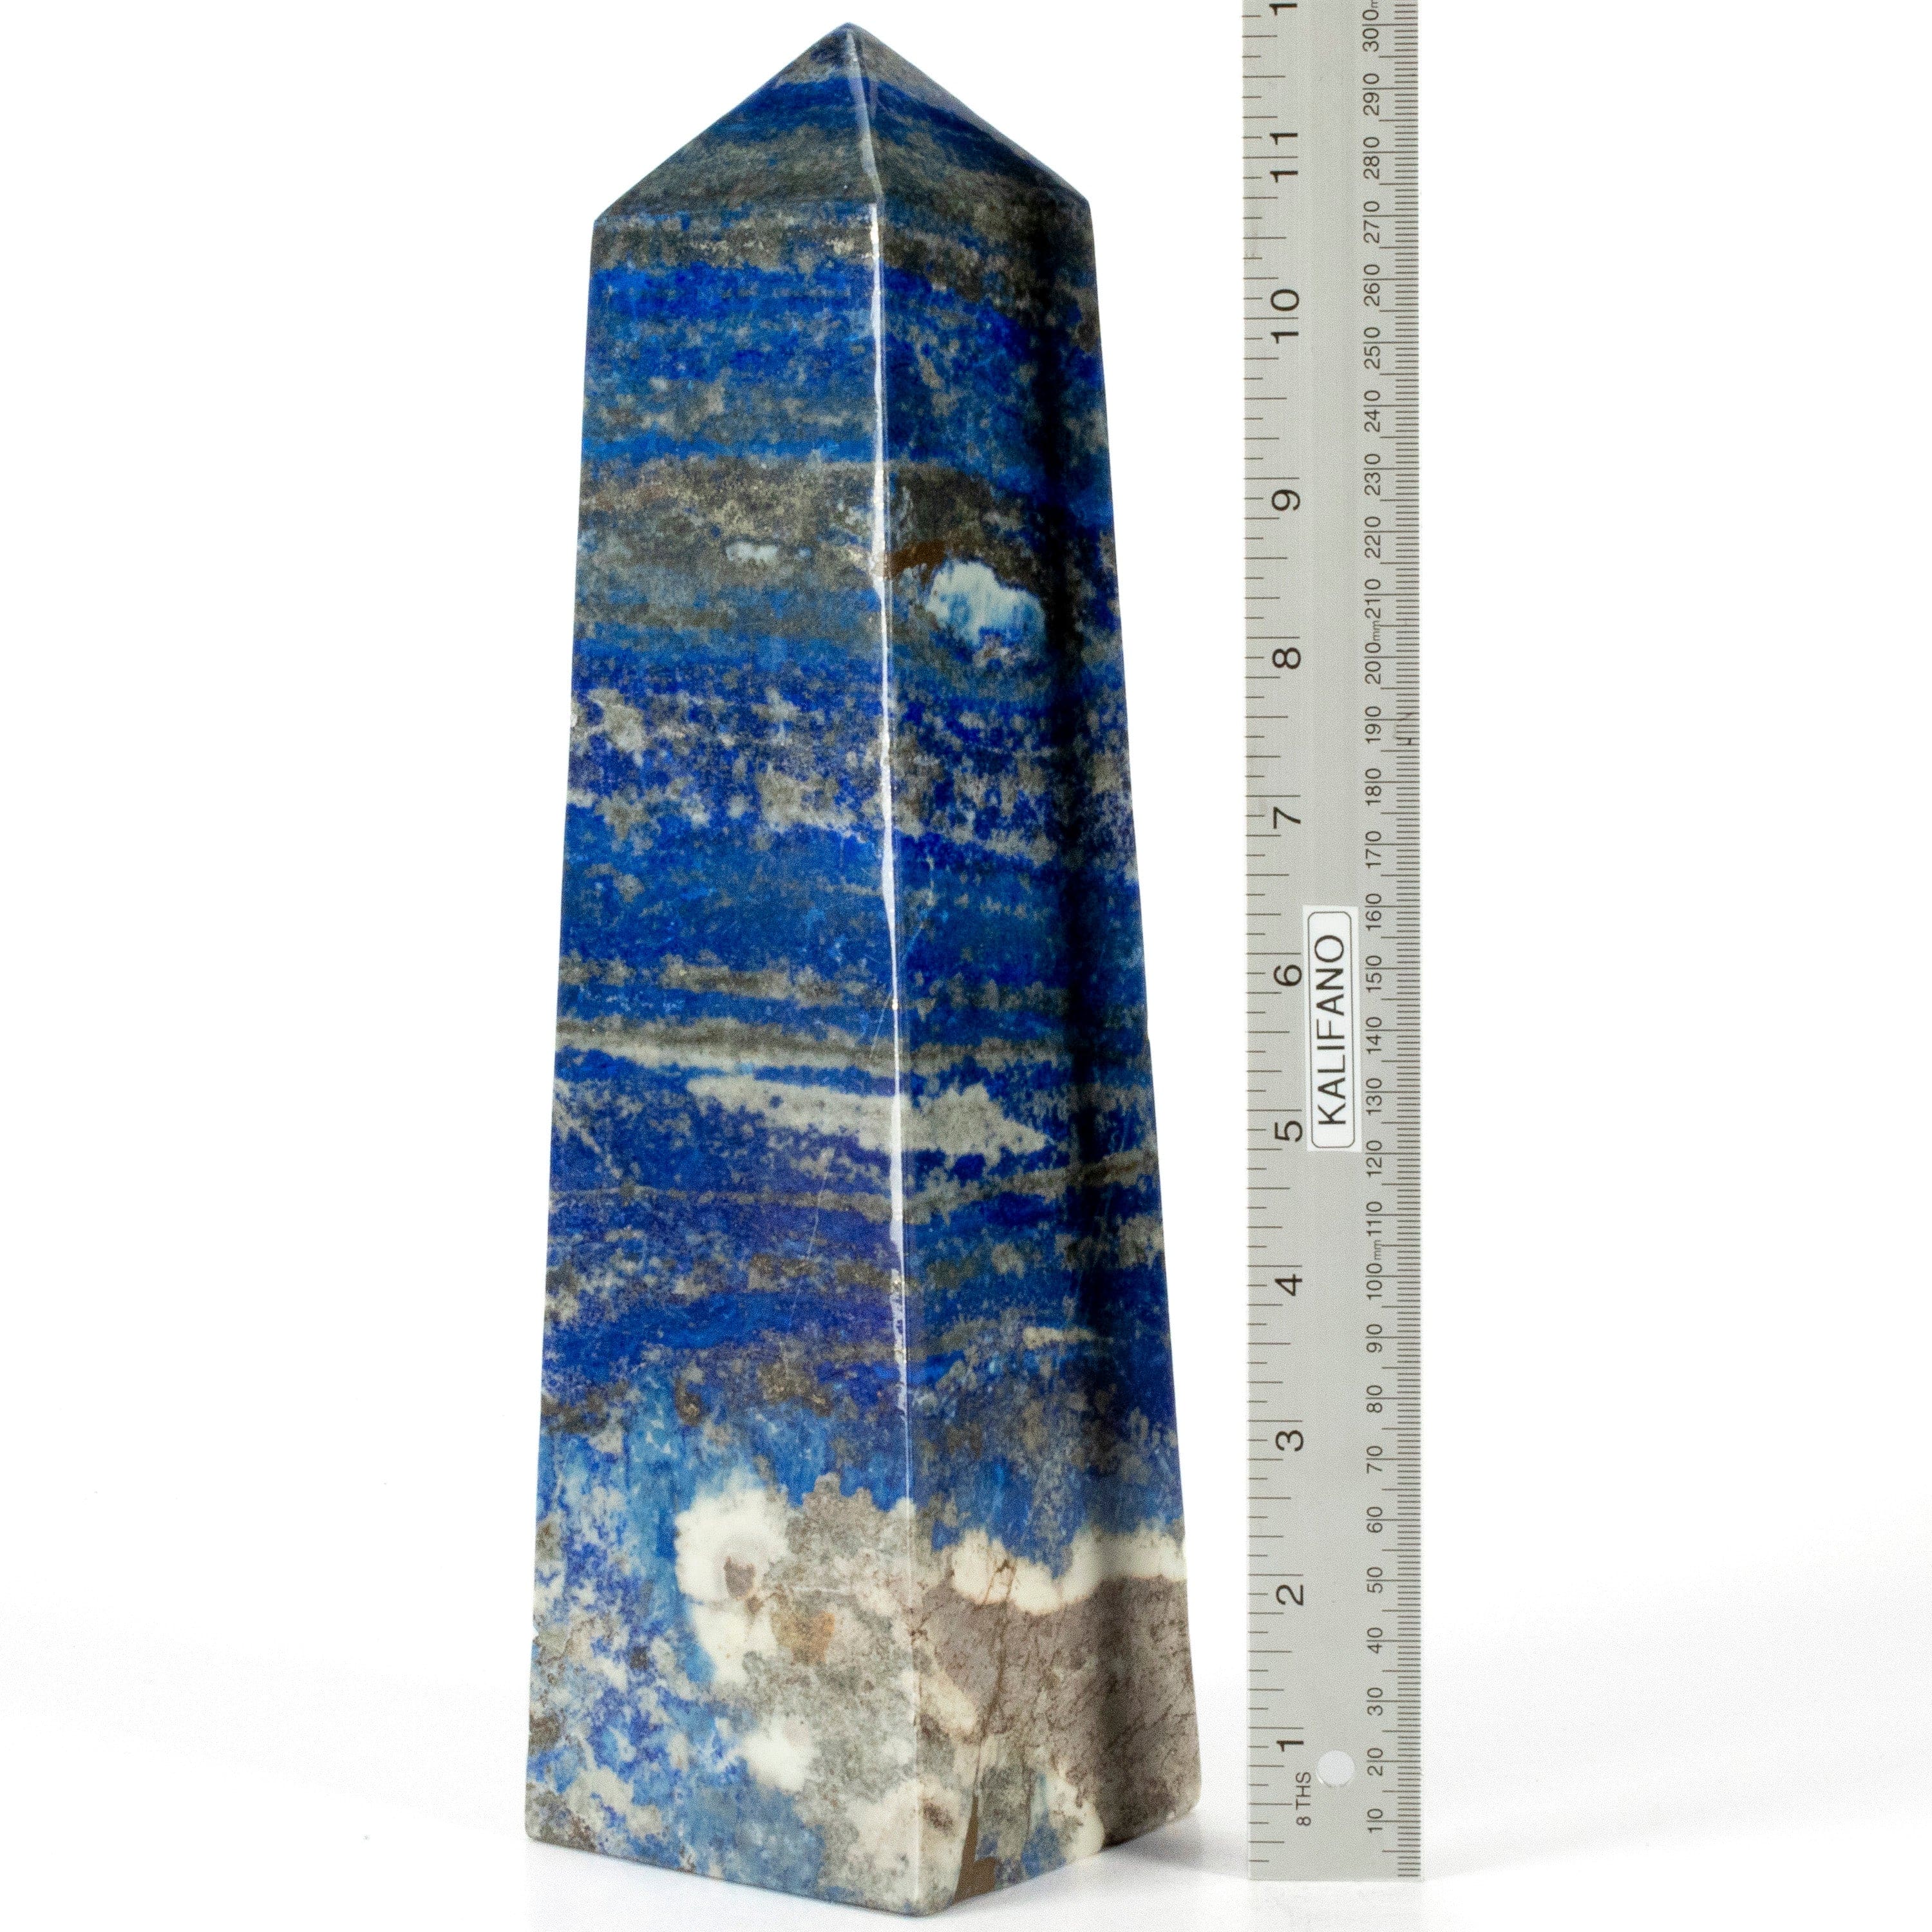 Kalifano Lapis Lapis Lazuli Polished Obelisk from Afghanistan - 12.5" / 10 lbs LPOB8800.001